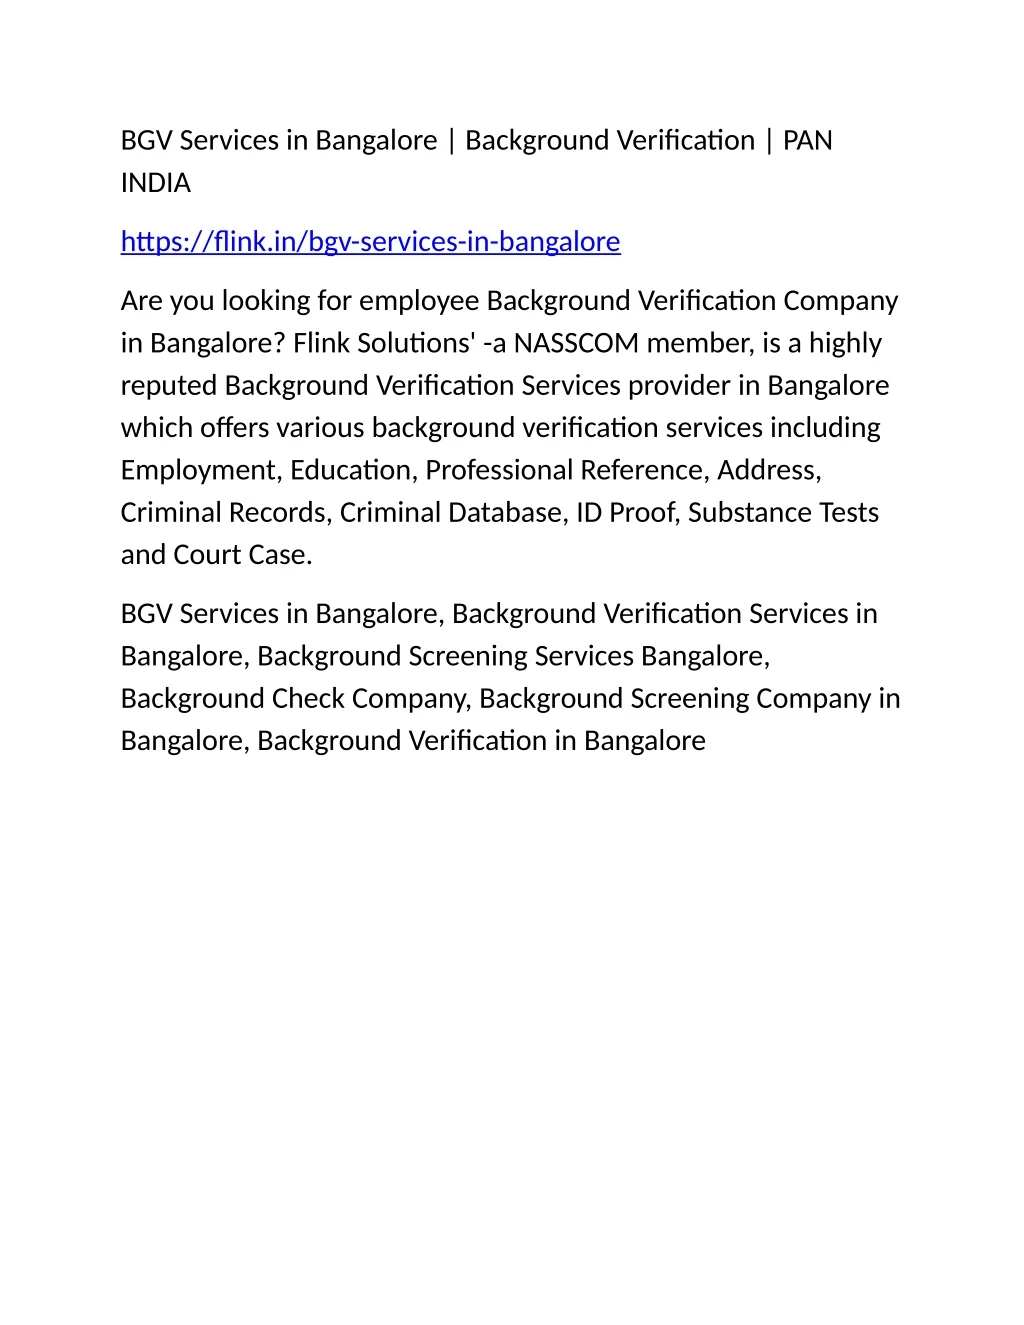 bgv services in bangalore background verification